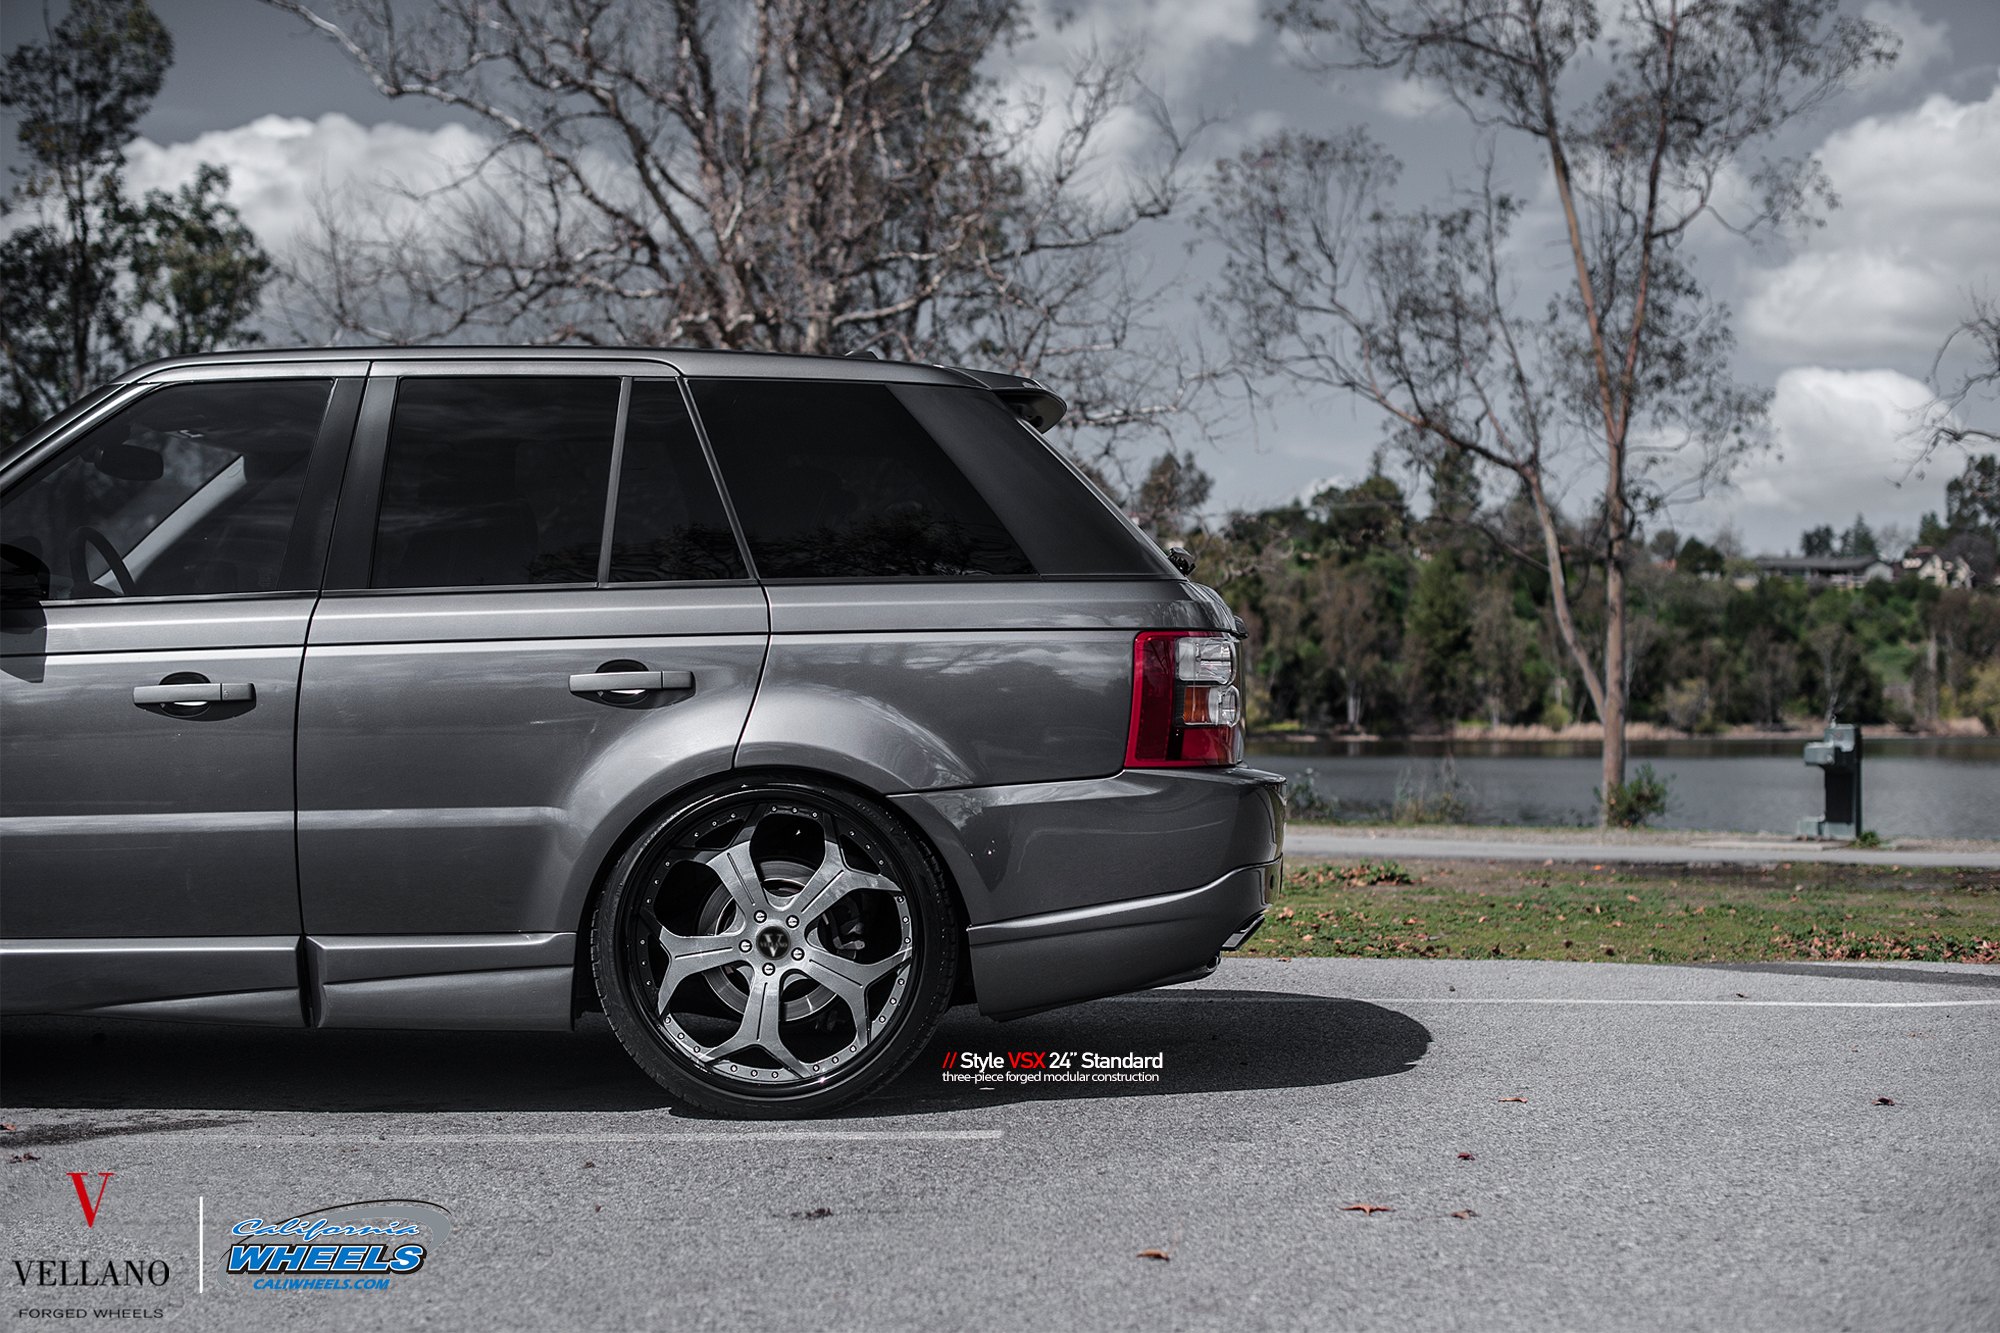 Custom Vellano Rims on Gray Range Rover Sport - Photo by Vellano